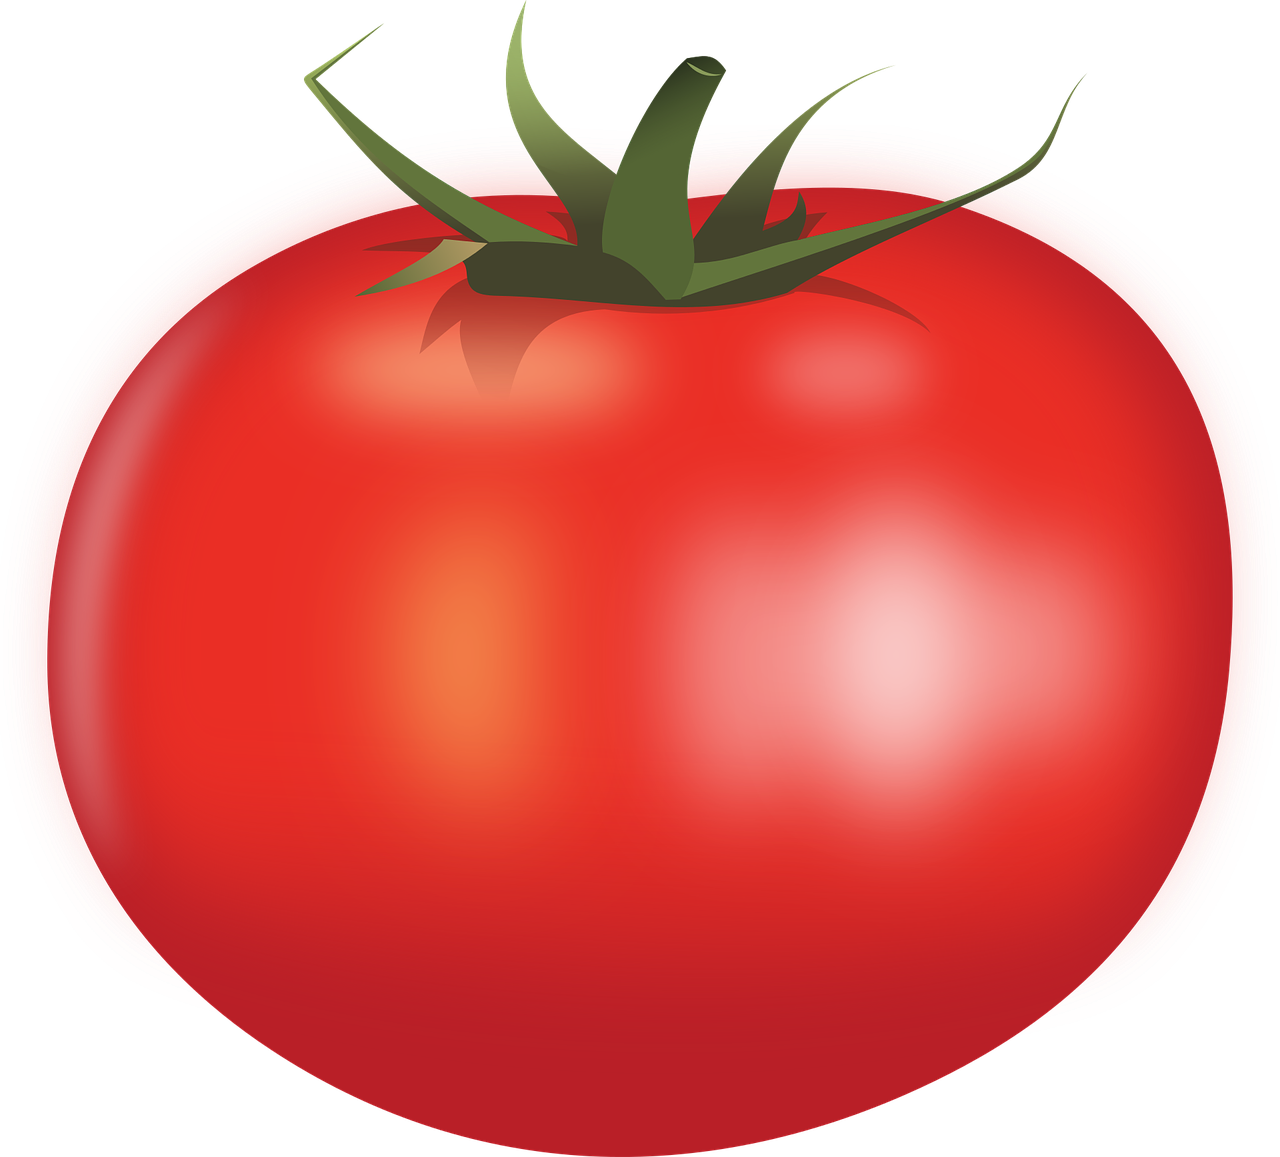 food tomato vegetable free photo